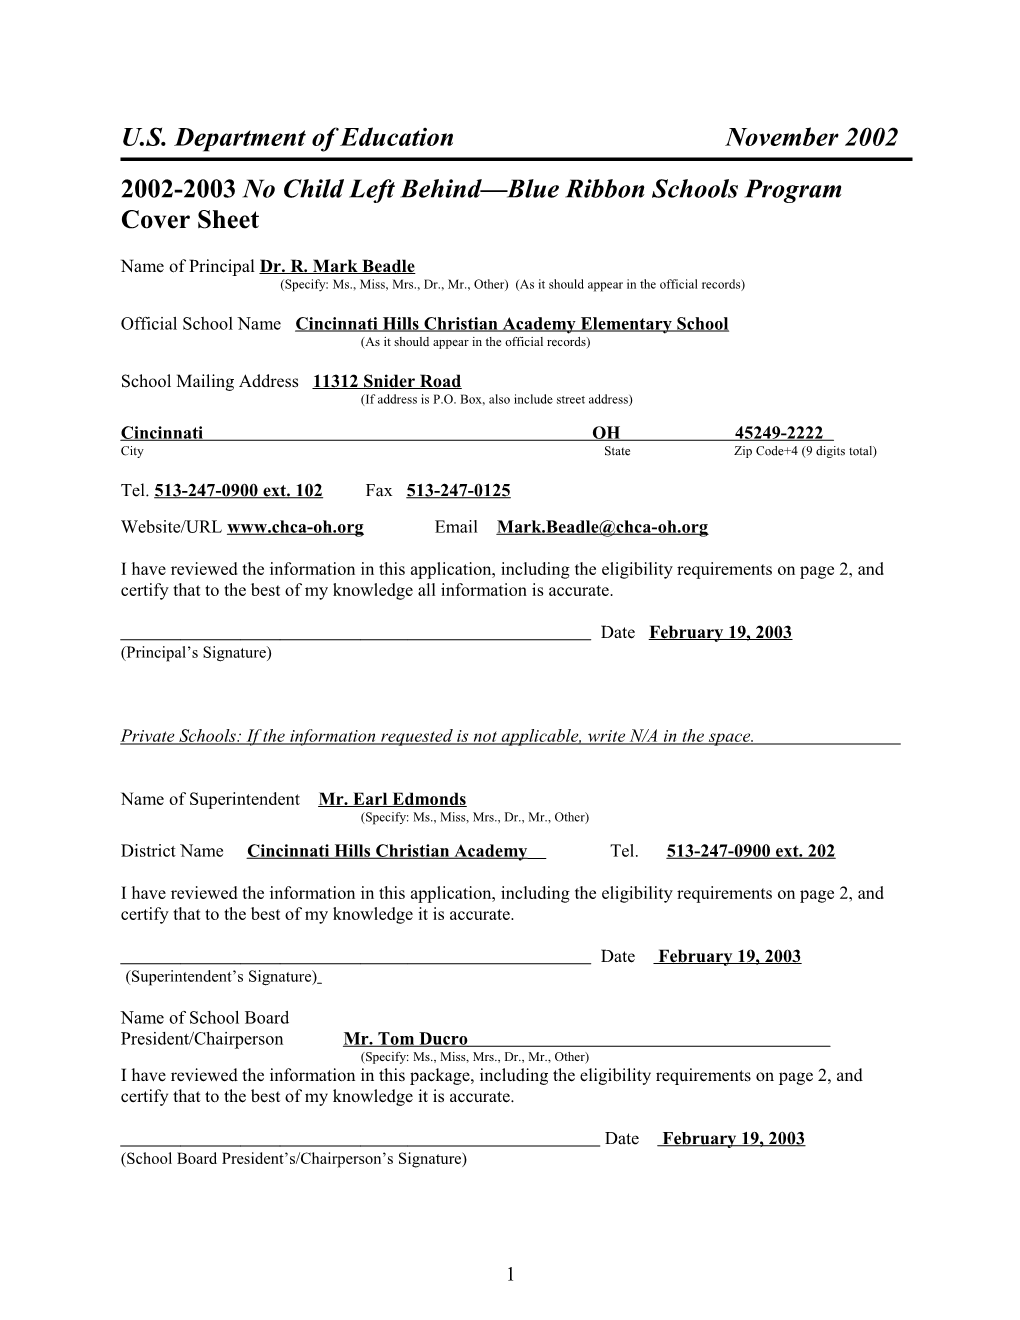 Cincinnati Hills Christian Academy Edyth B. Lindner Elementary School 2003 No Child Left